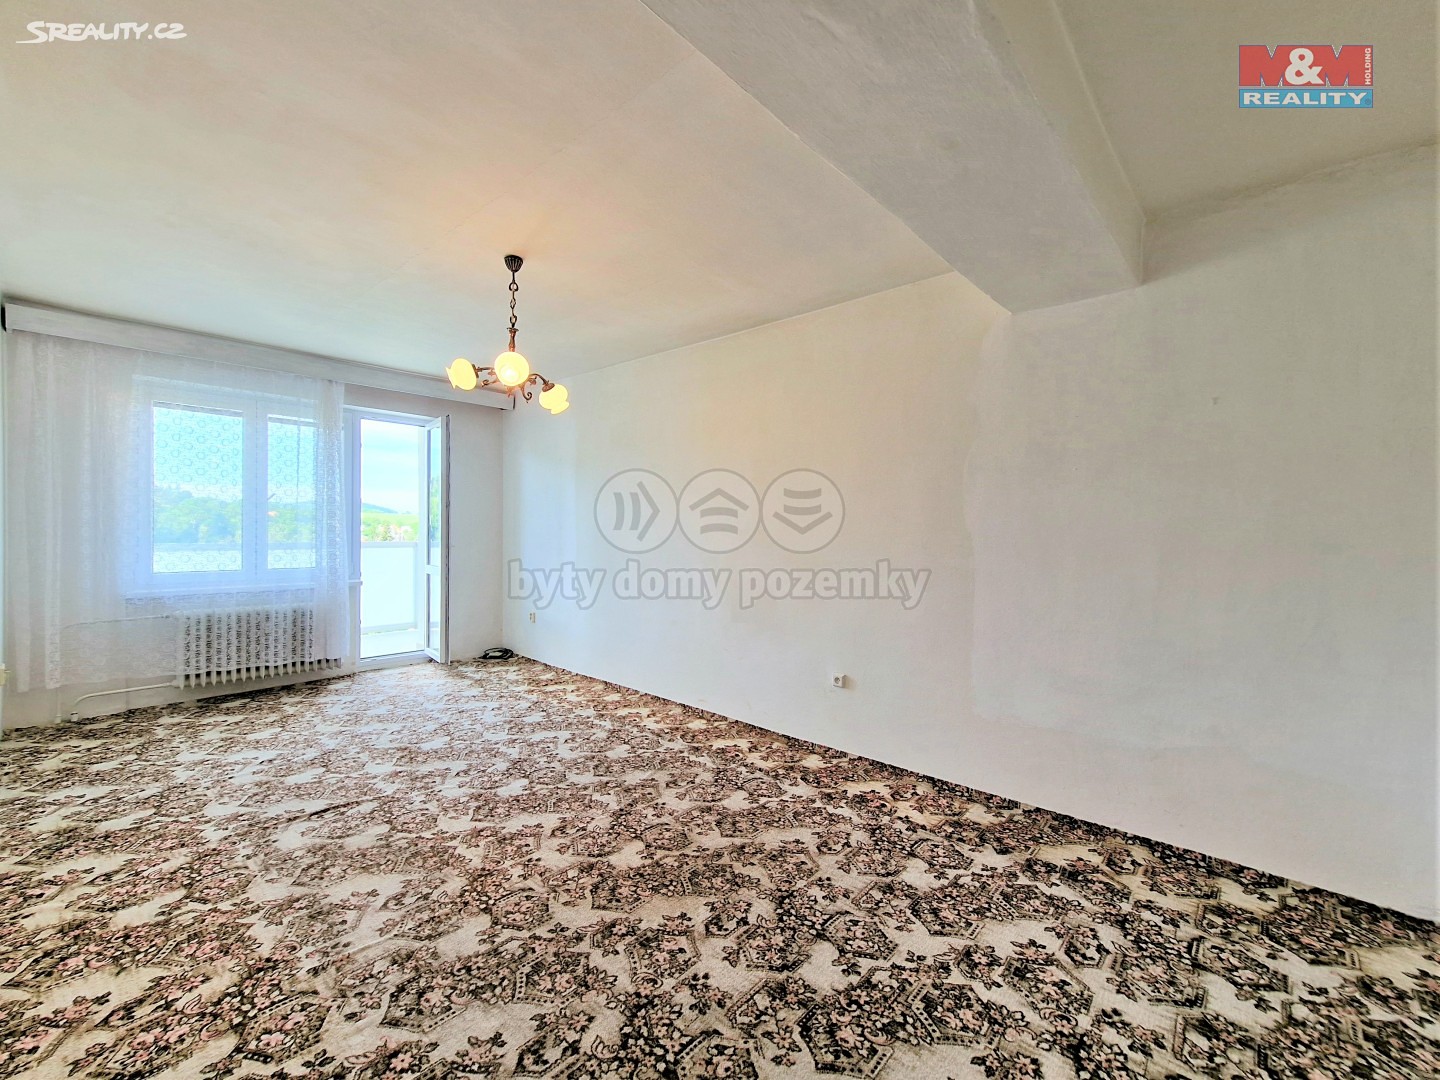 Prodej bytu 2+1 58 m², SPC H, Krnov - Pod Cvilínem